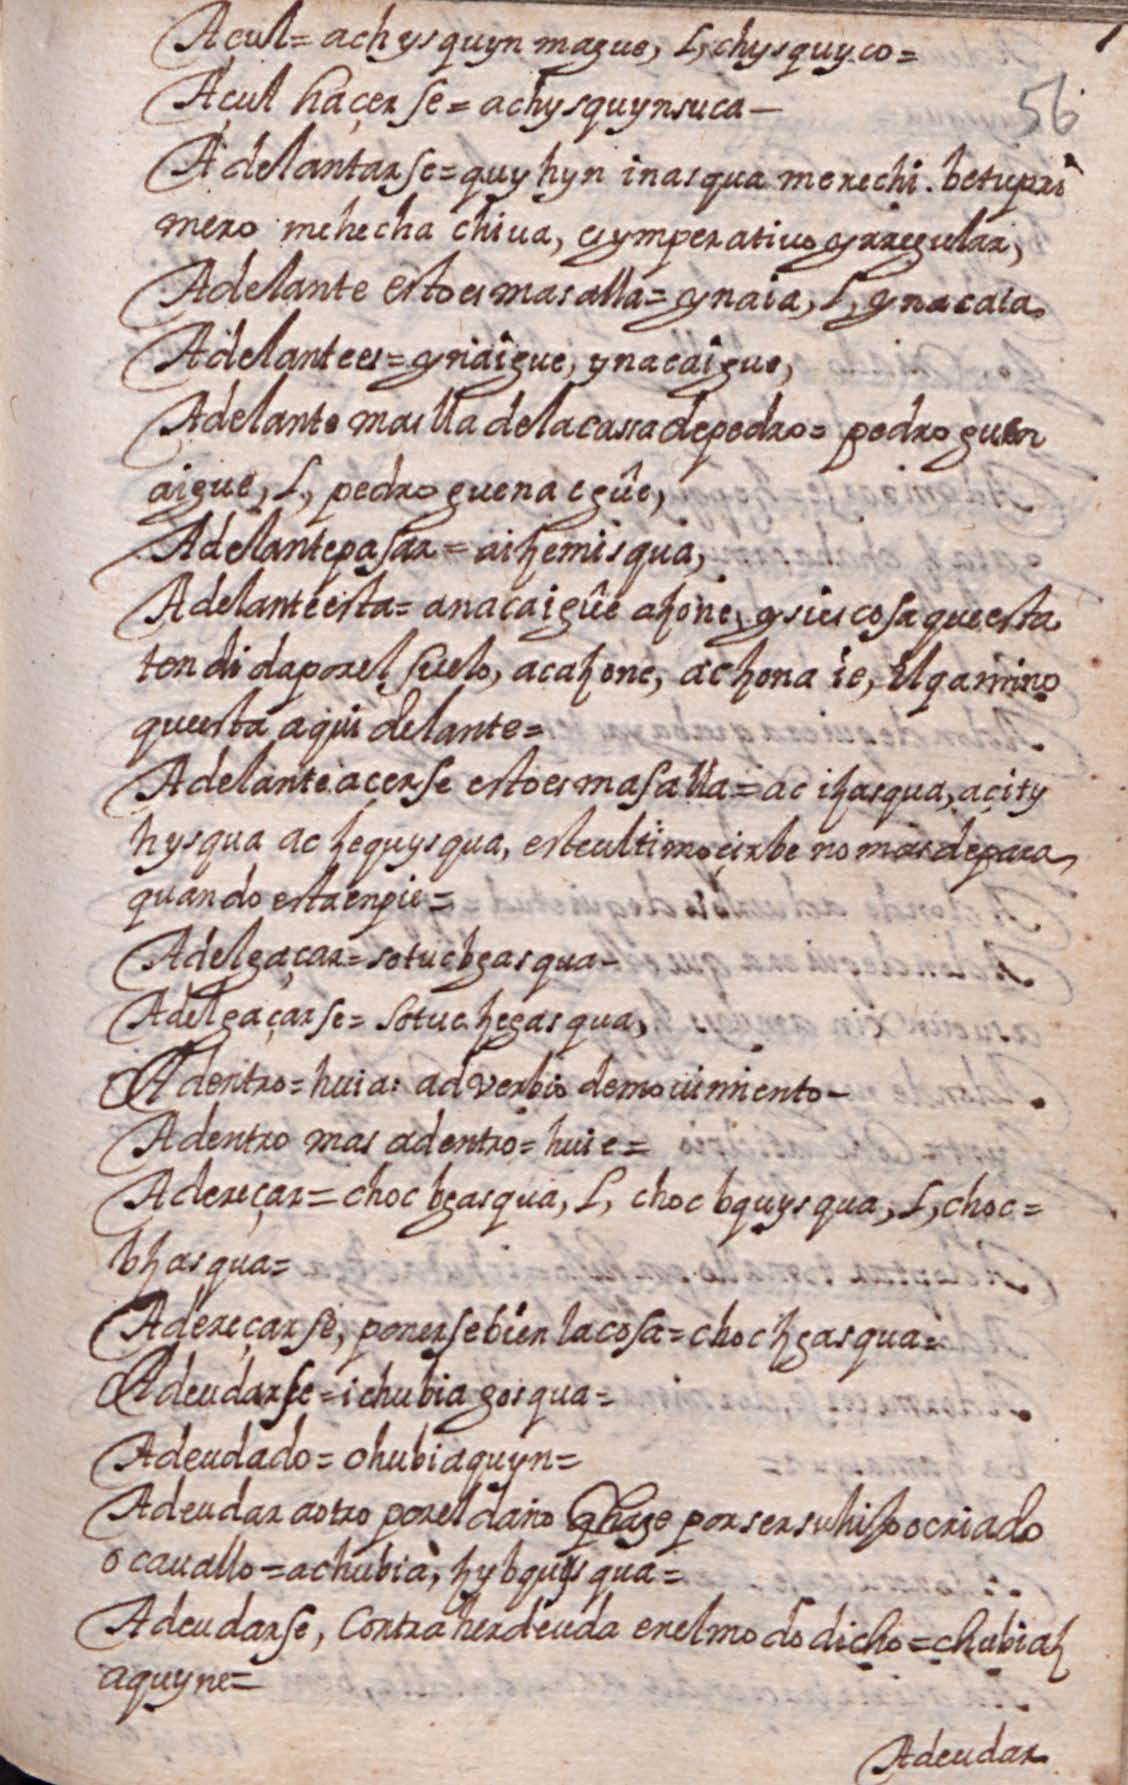 Manuscrito 158 BNC Vocabulario - fol 7r.jpg